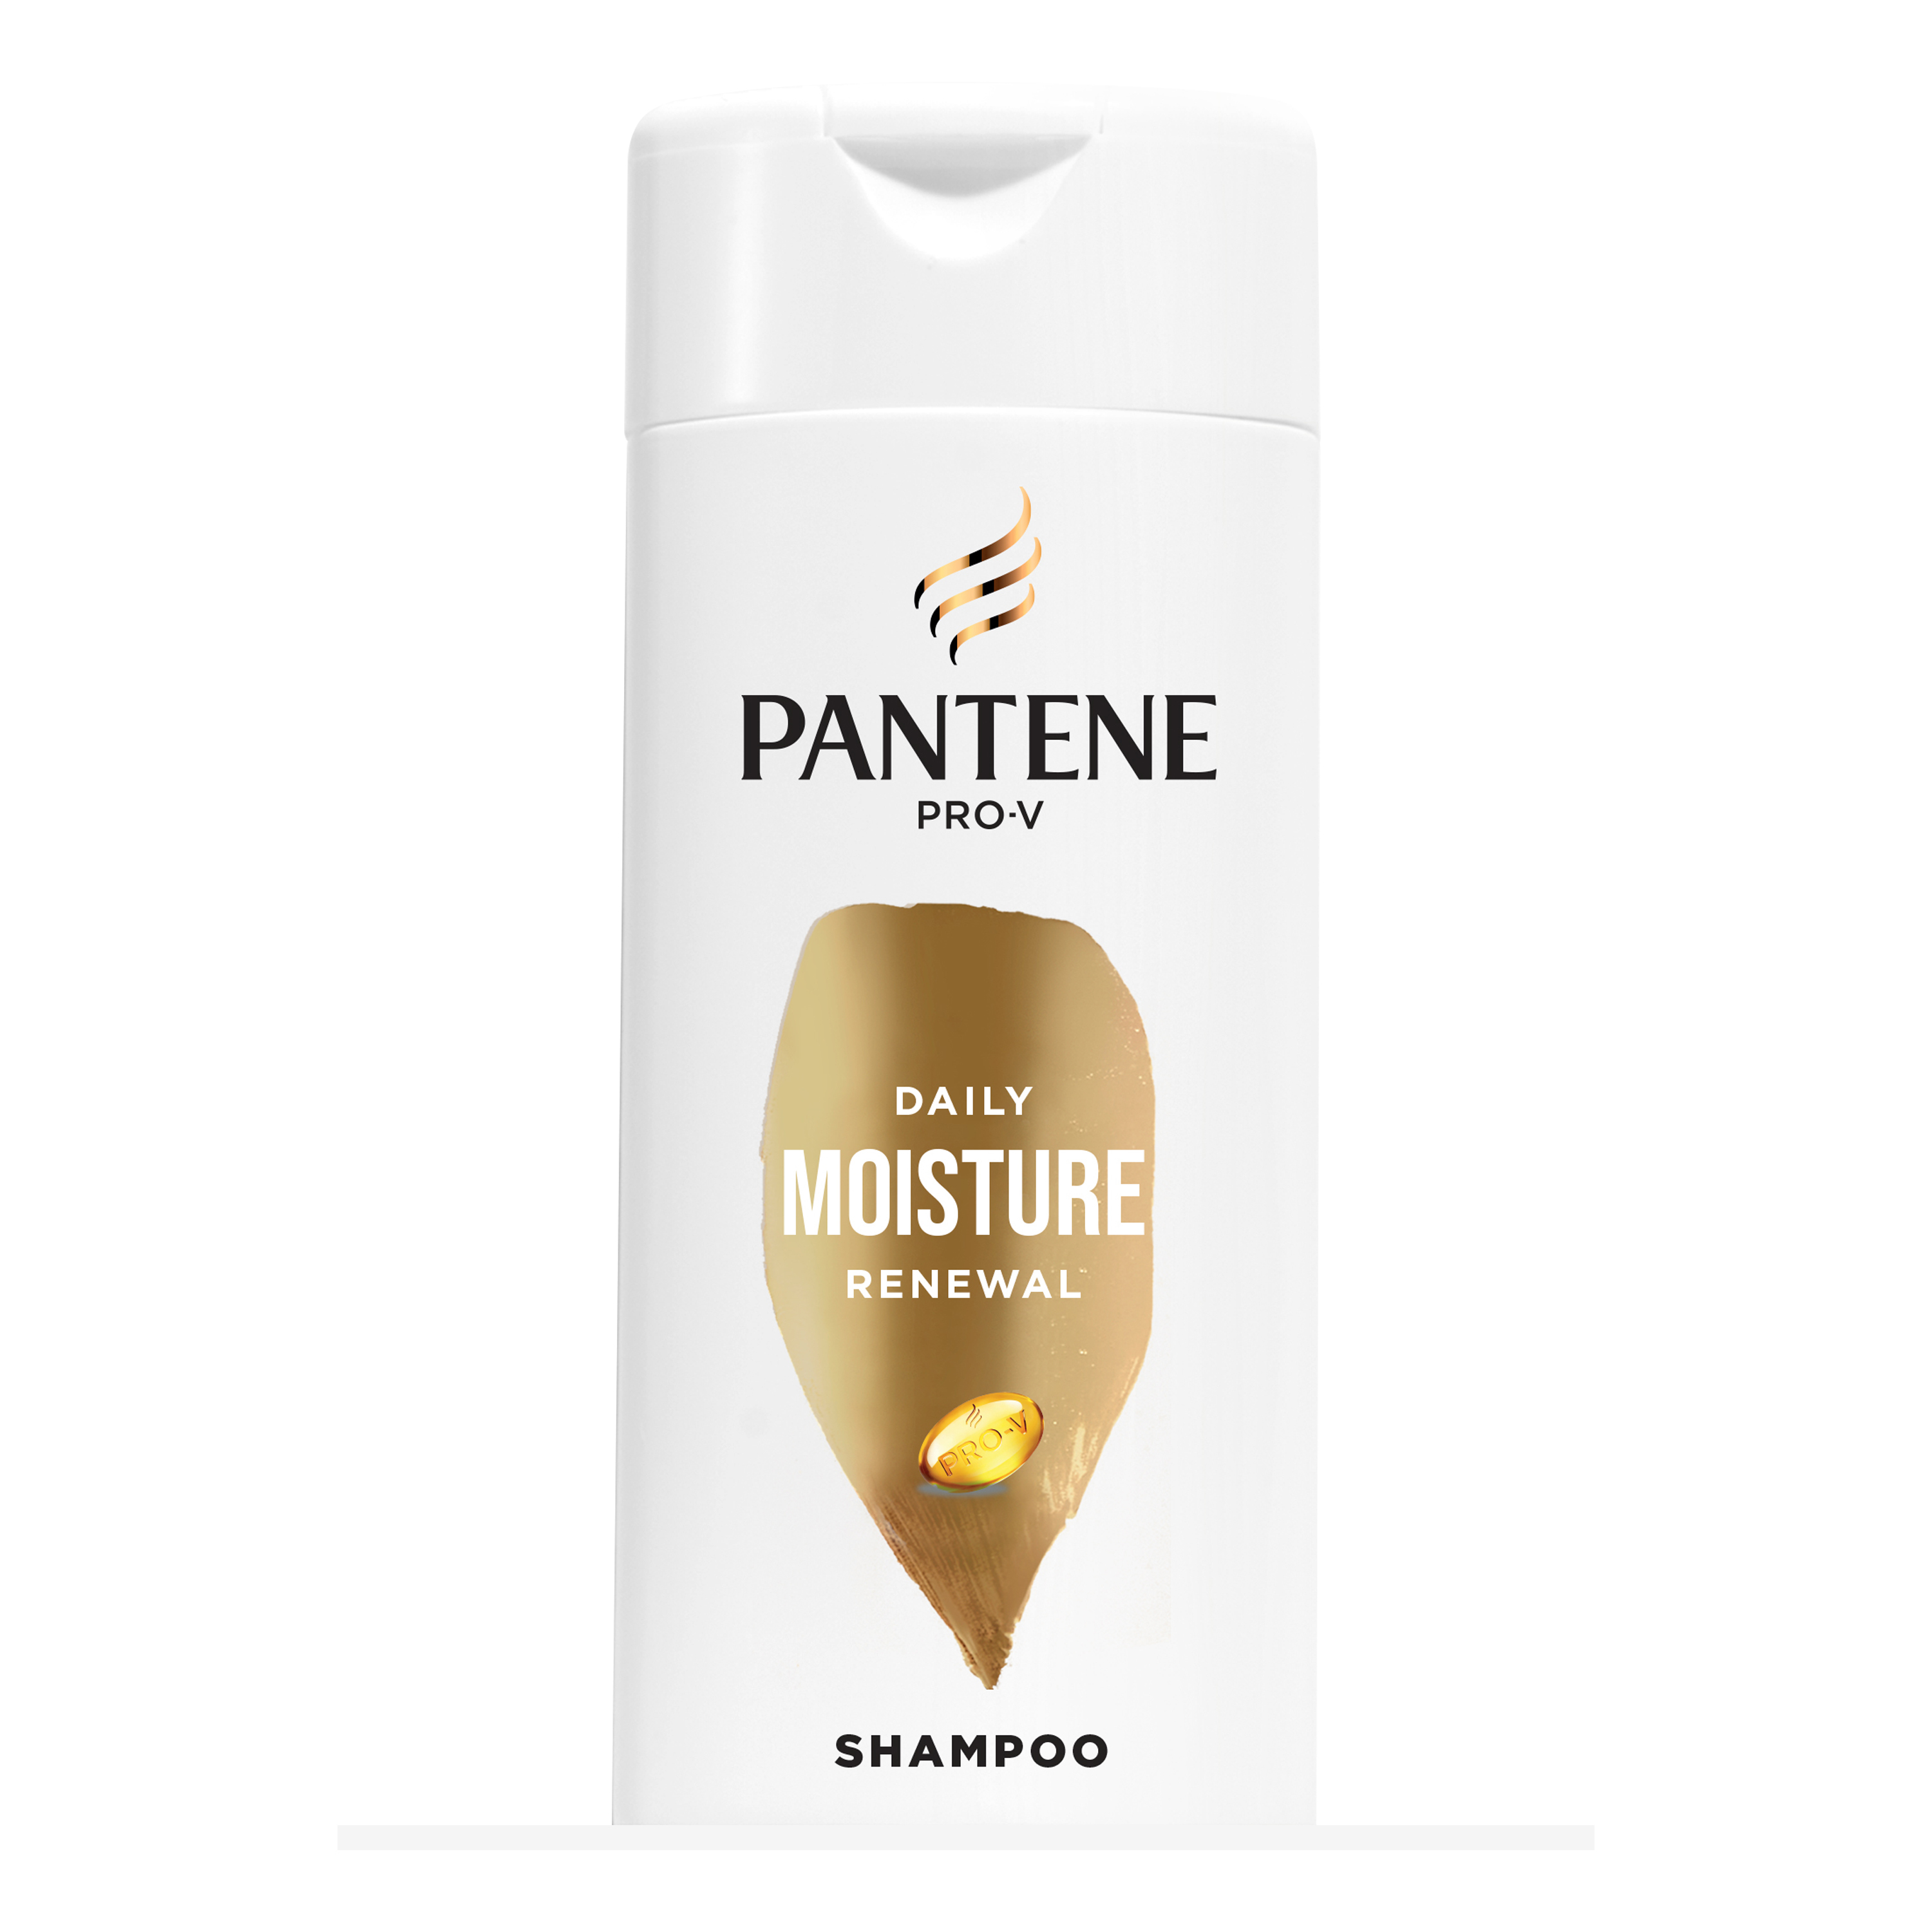 Pantene Pro-V Daily Moisture Renewal Shampoo, 3.38 fl oz - image 1 of 10